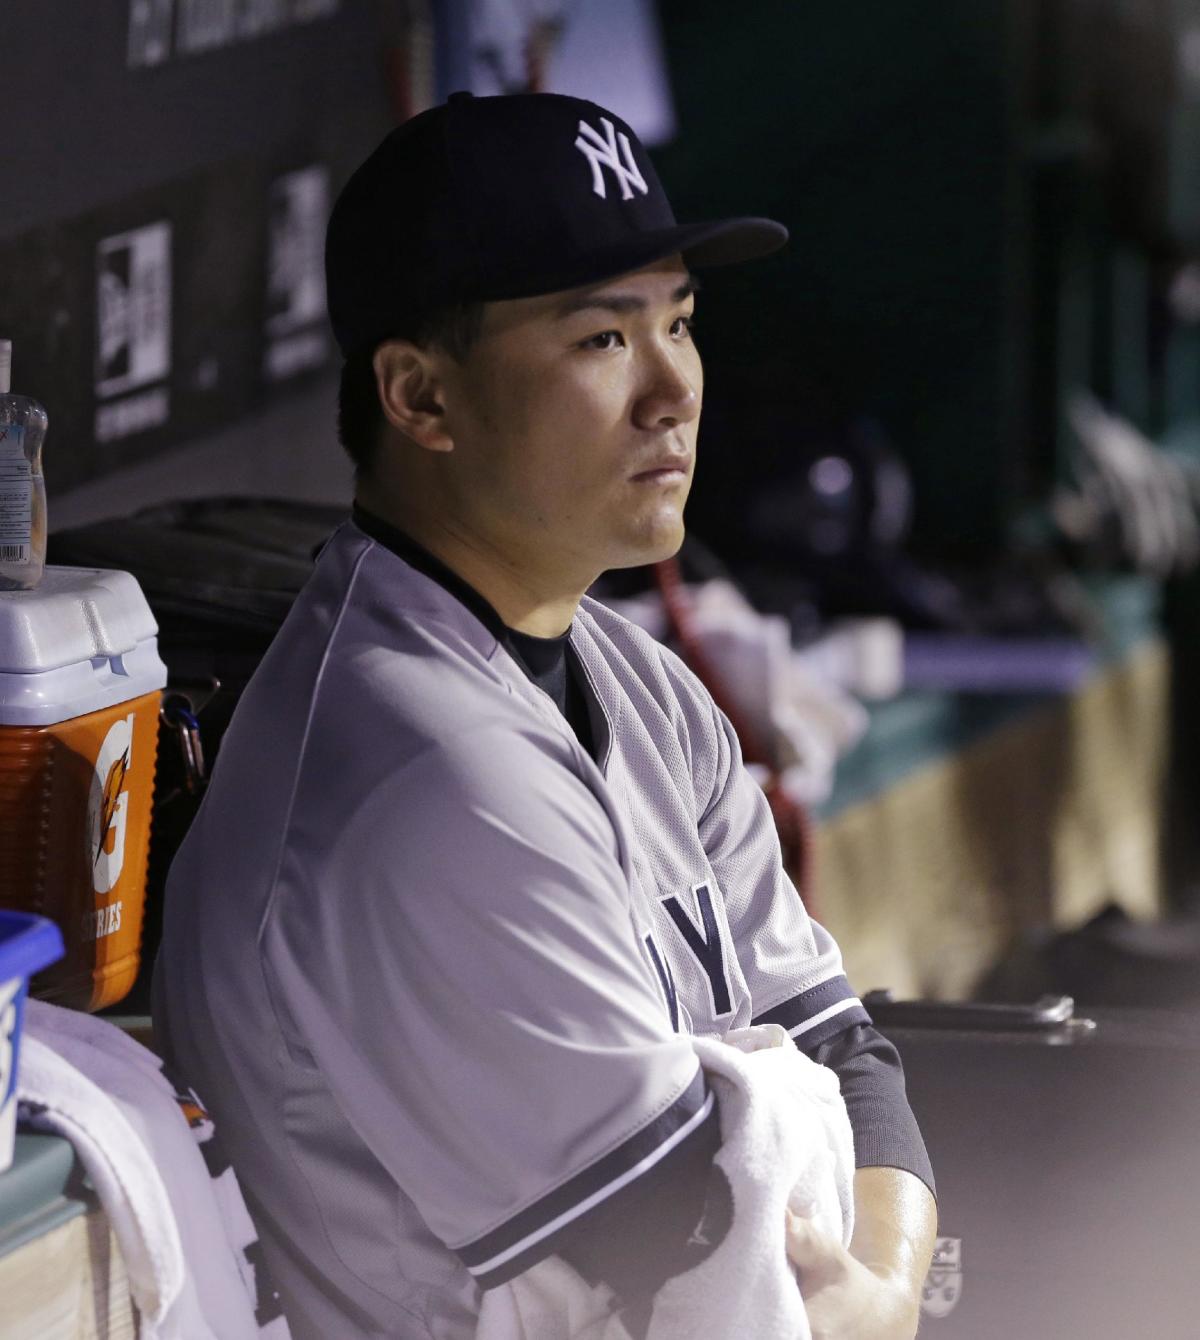 Yankees' Masahiro Tanaka's scary injury latest blow in scary time